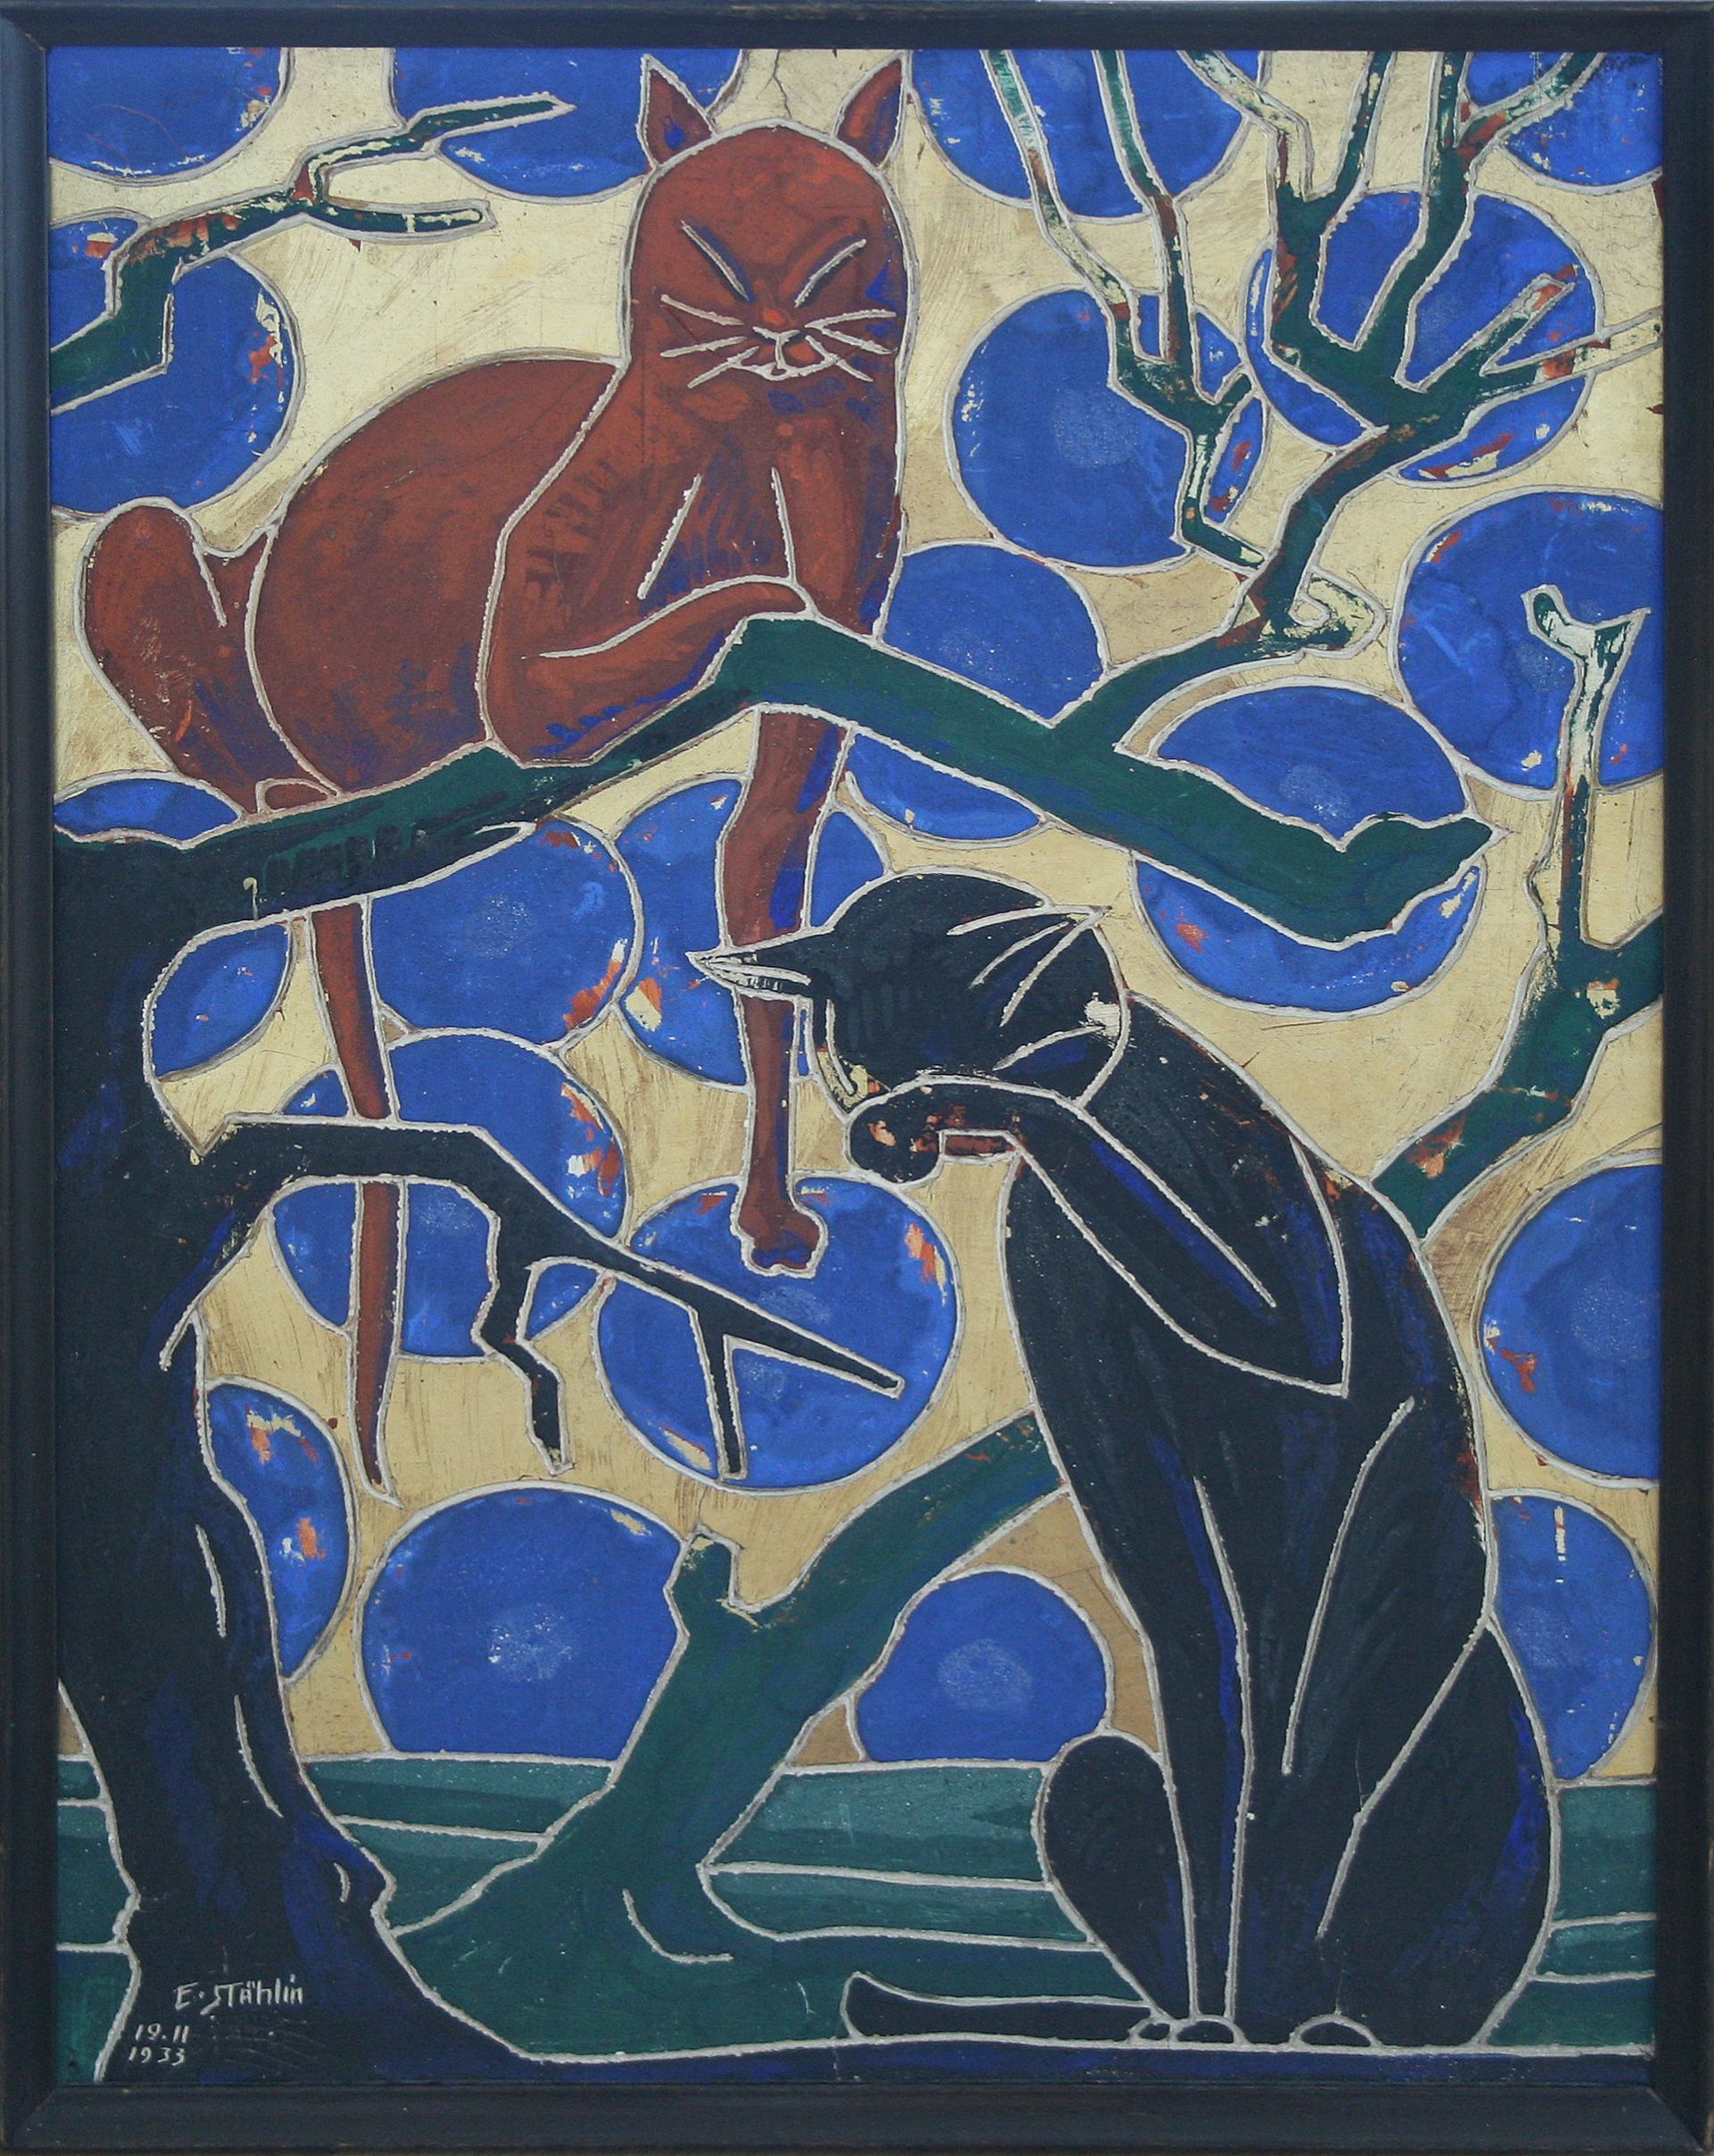 Erwin Stählin-Two cats II